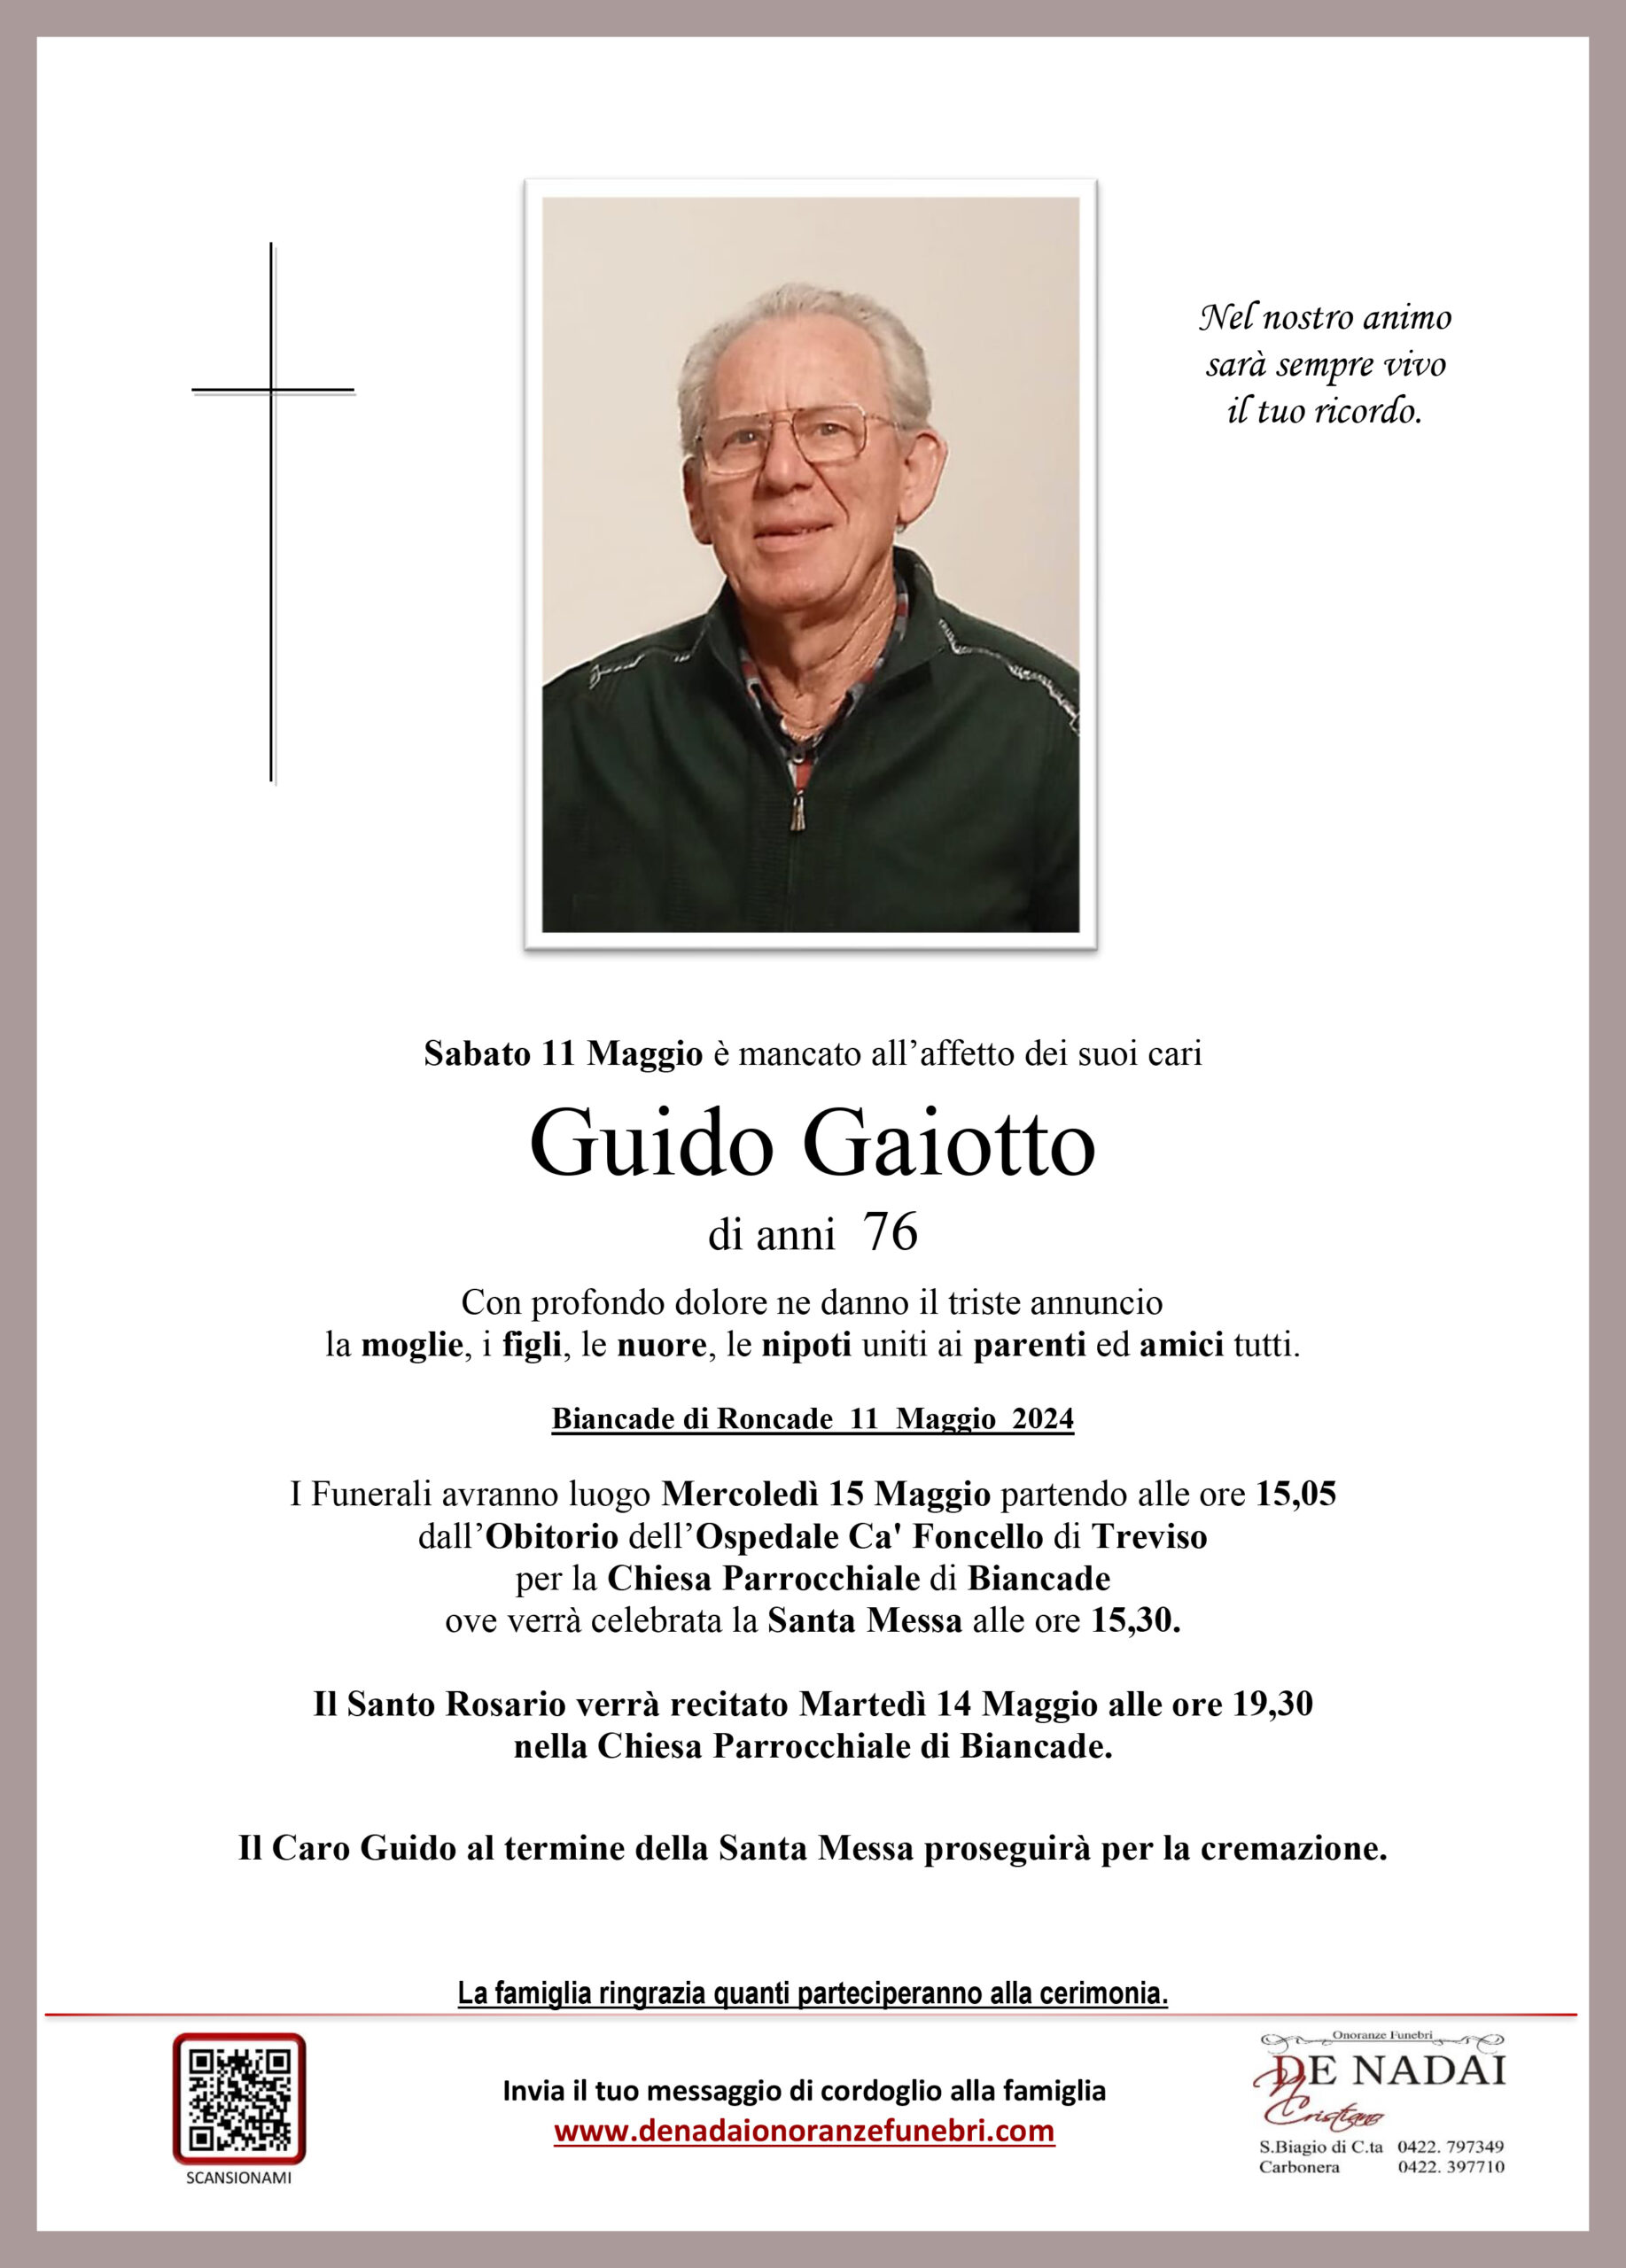 Gaiotto Guido